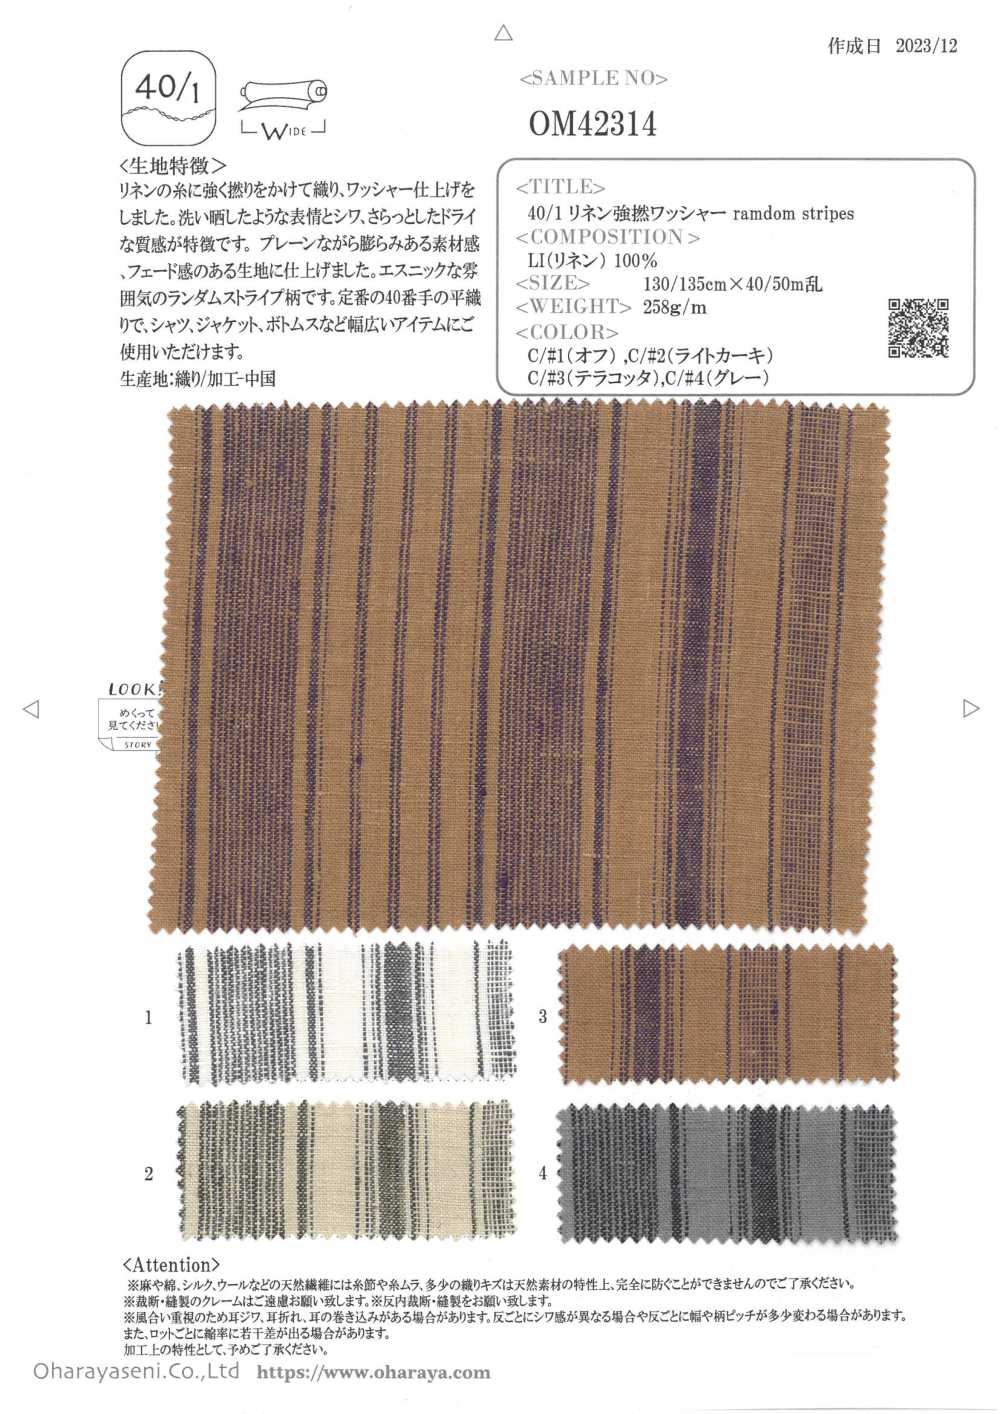 OM42314 40/1 Linen High Twist Washer Processing Ramdom Stripes[Textile / Fabric] Oharayaseni